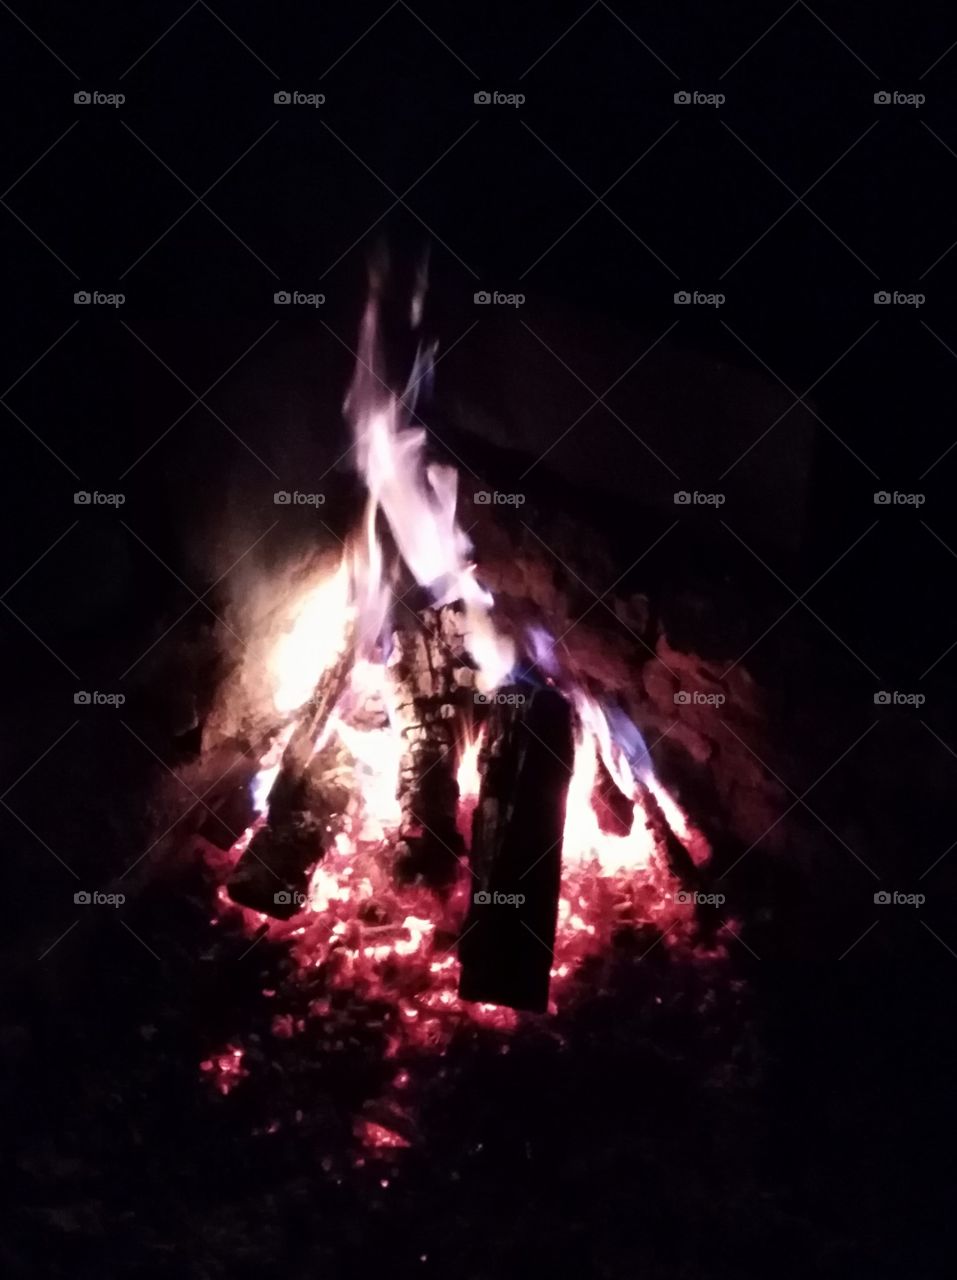 Nice evening for a bonfire